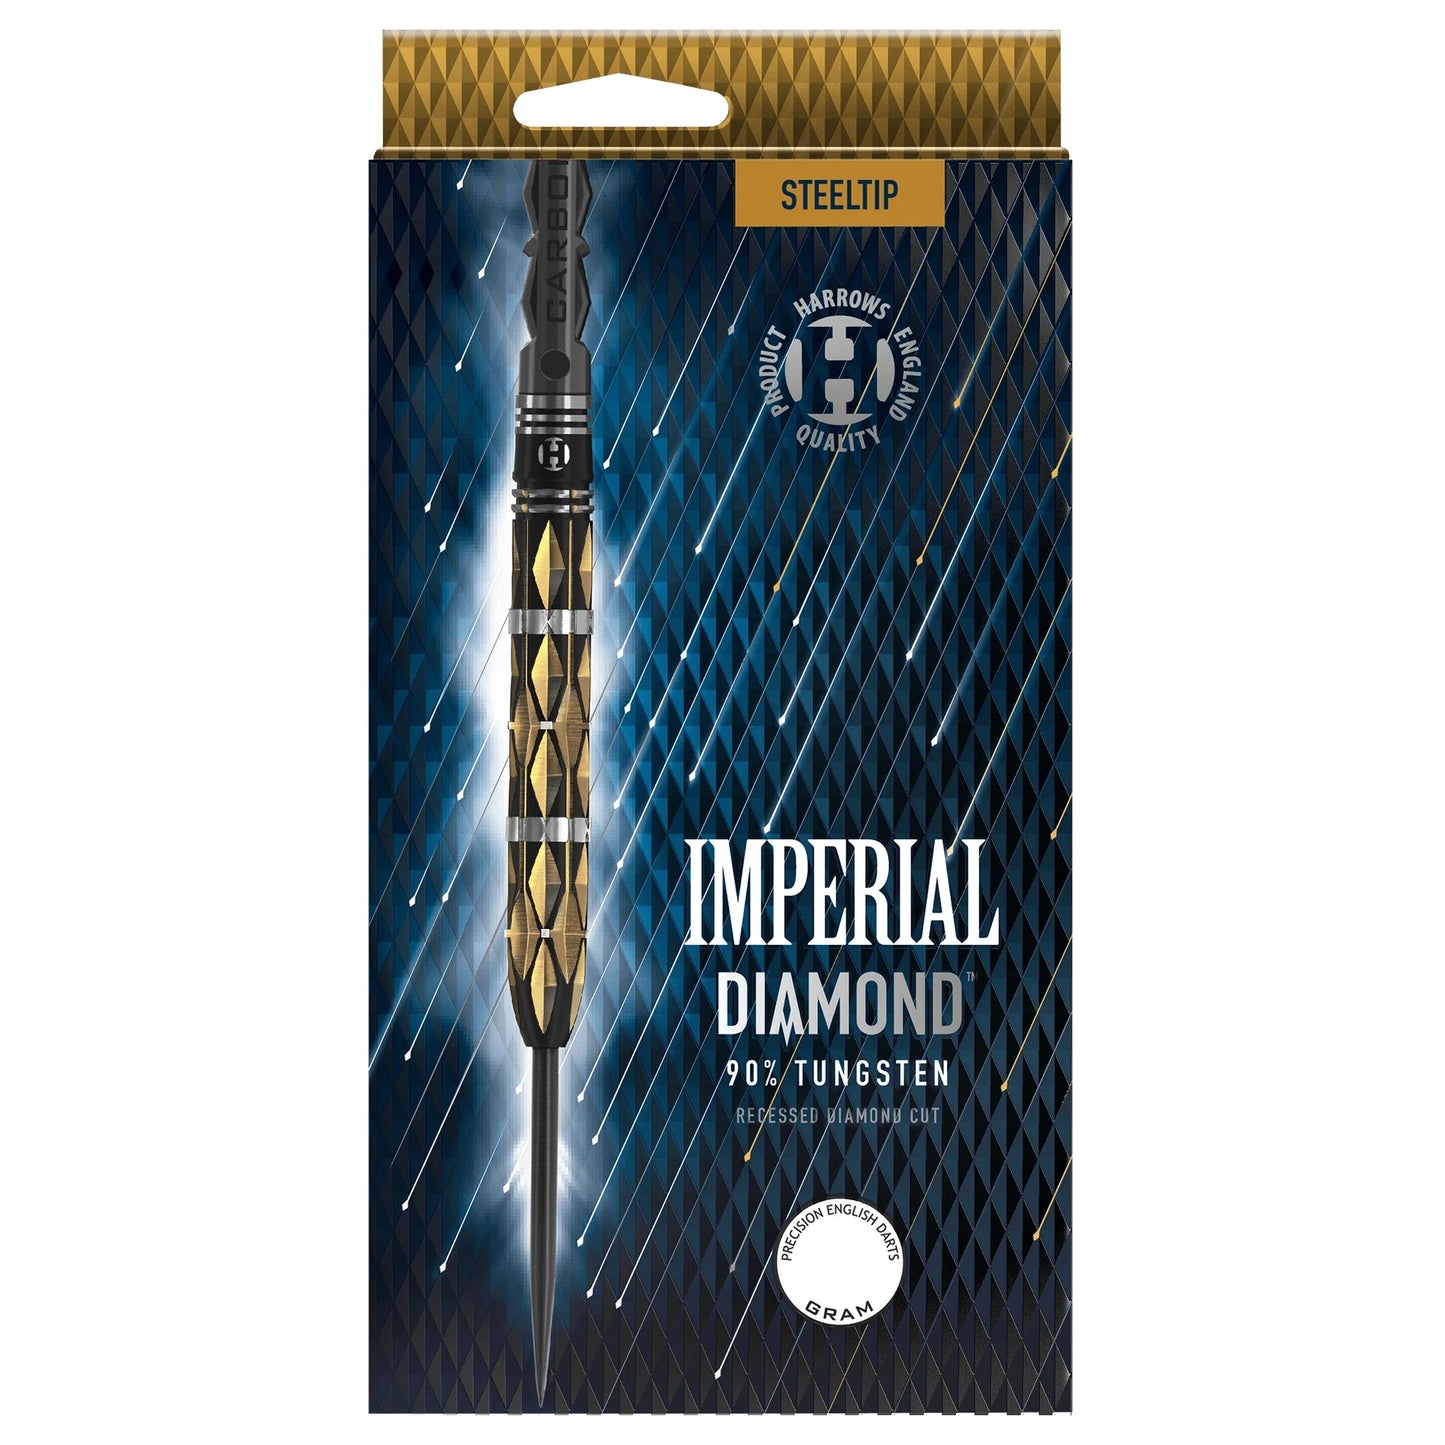 Harrows Imperial Diamond 23g Darts